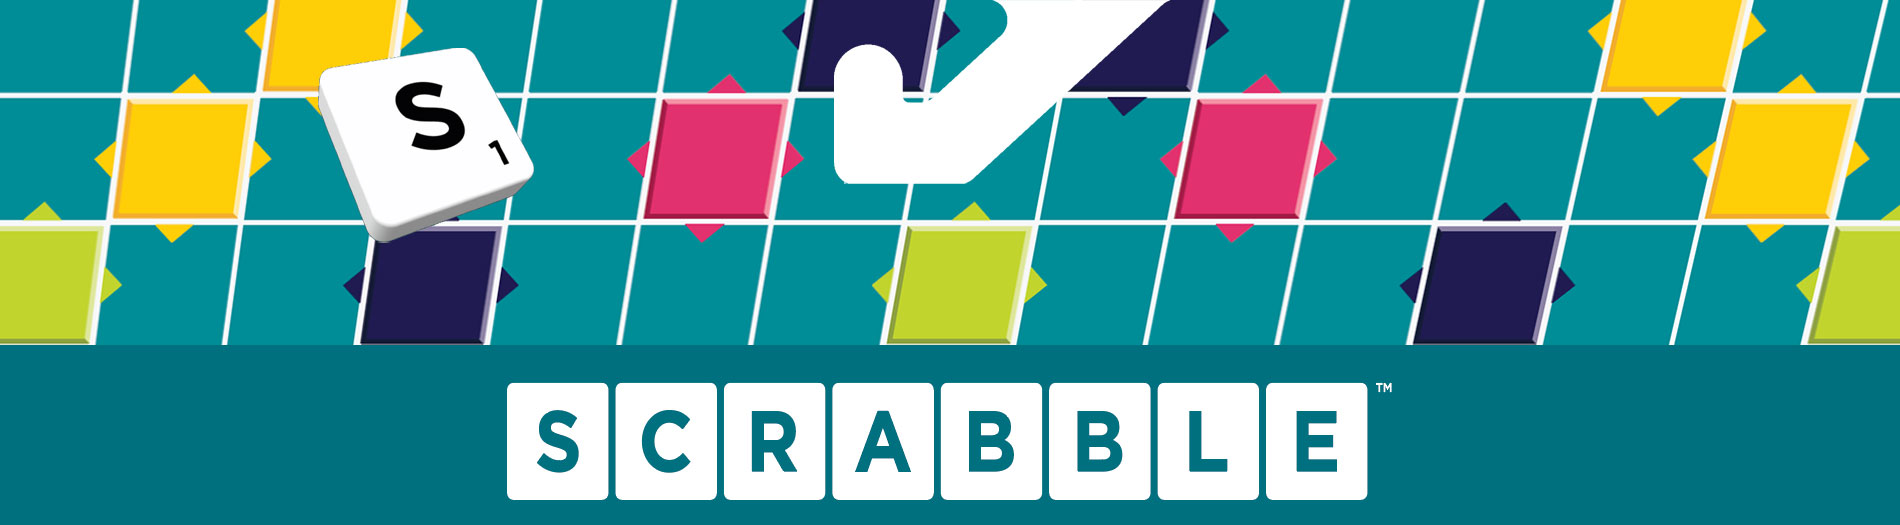 Scrabble | Collins Dictionary